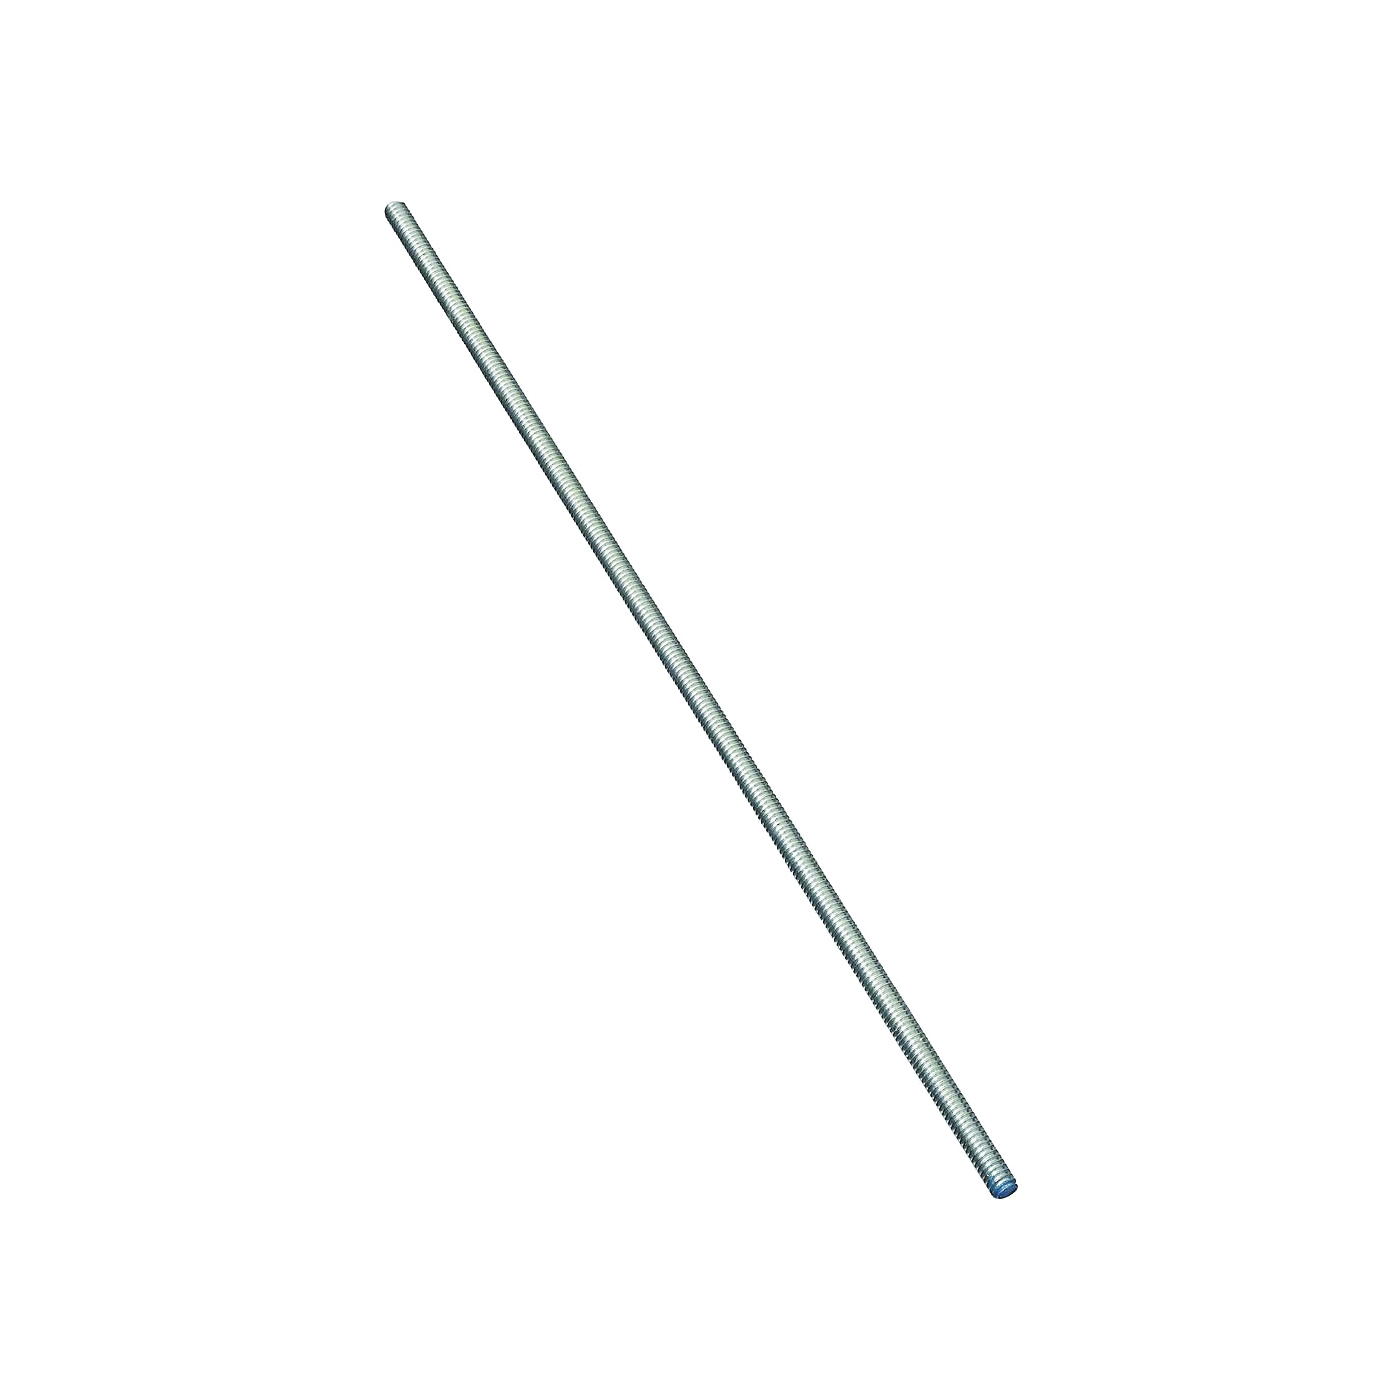 N179-580 Threaded Rod, 1/4-20 Thread, 72 in L, A Grade, Steel, Zinc, UNC Thread